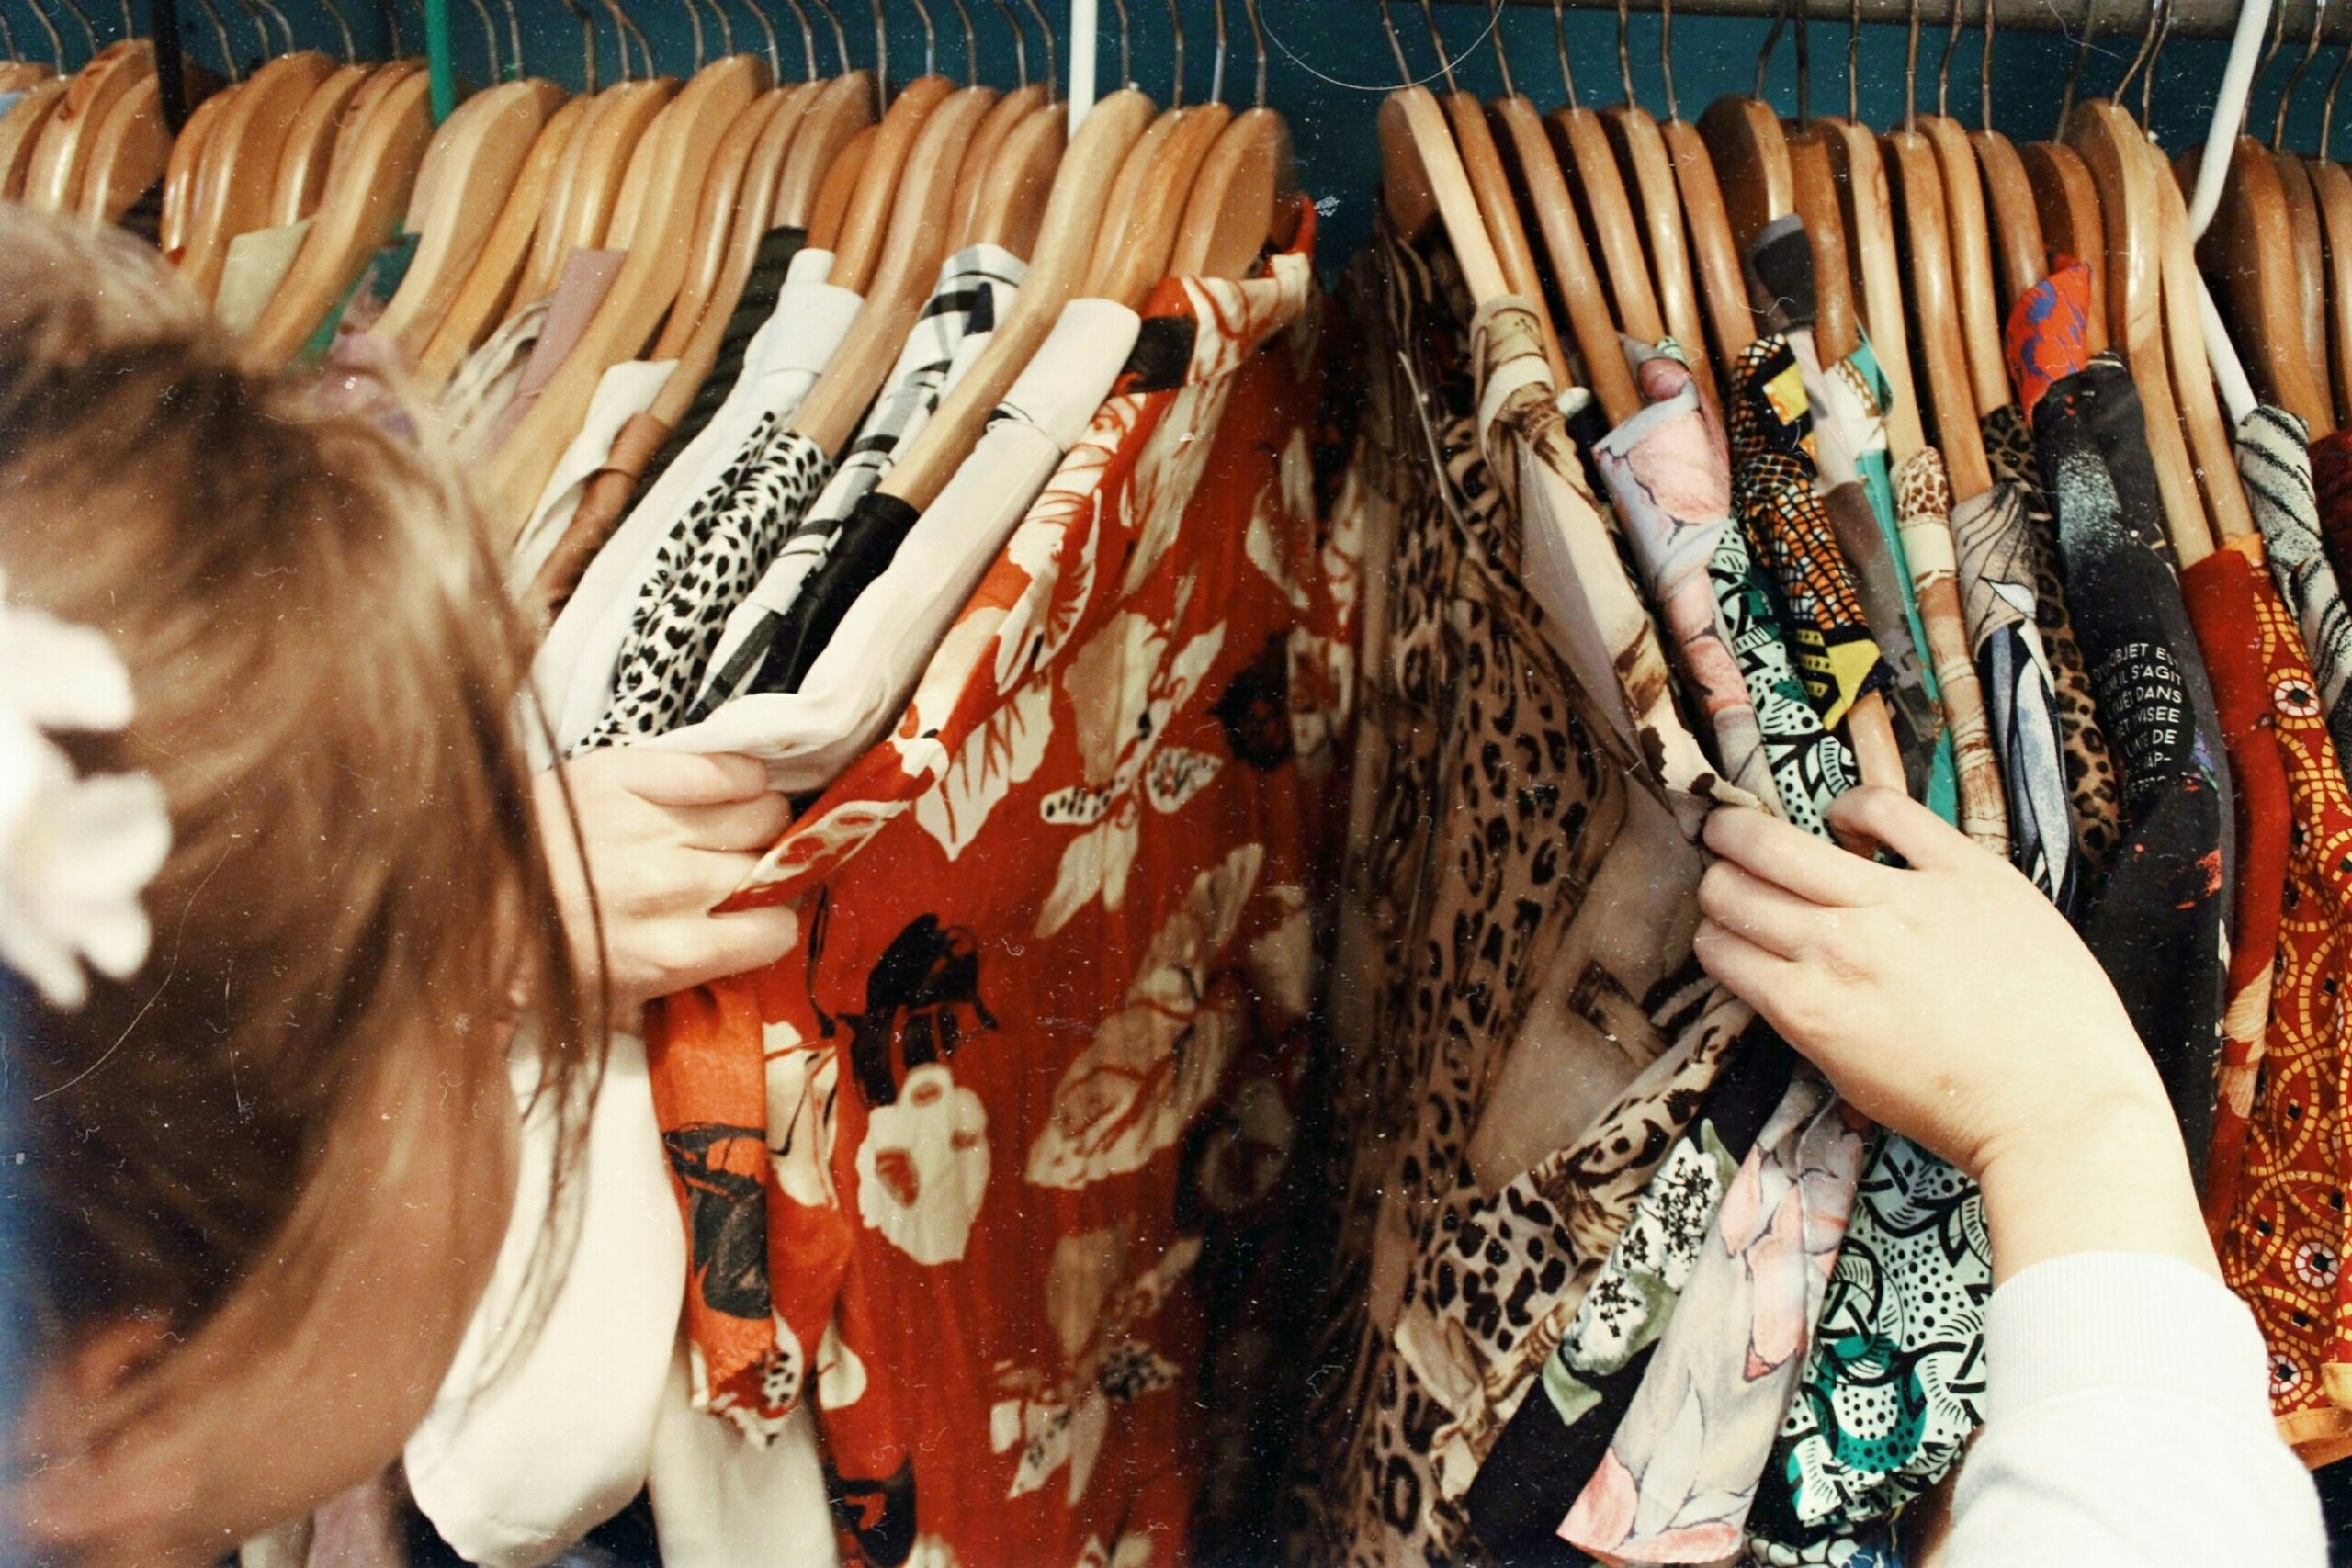 individual browsing through clothing items while shopping